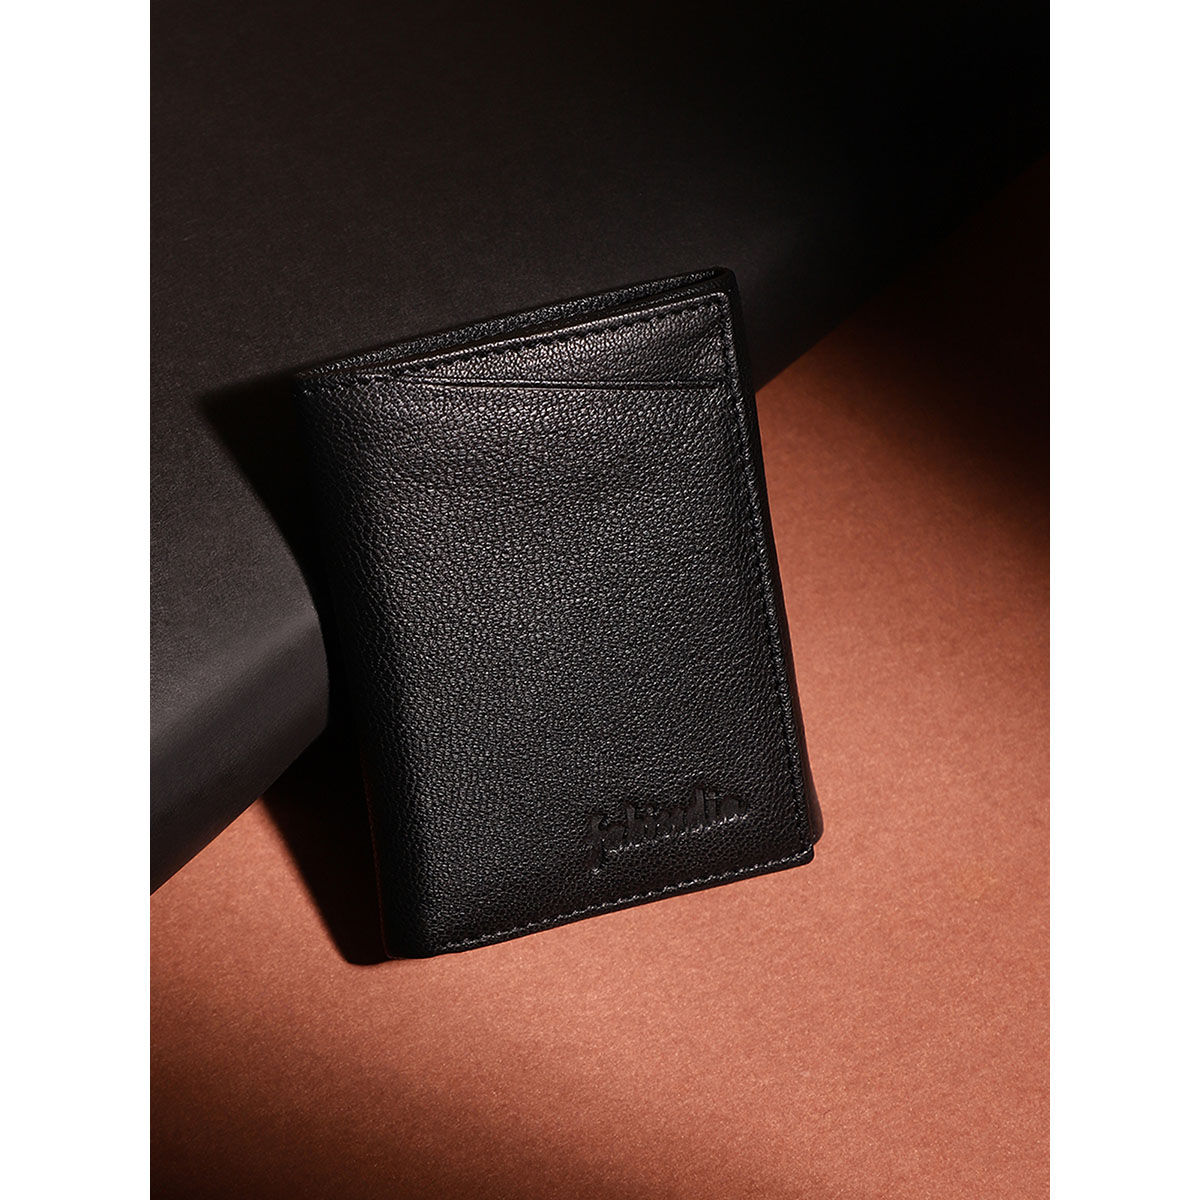 Fabindia Wallets : Buy Fabindia Leather Embossed Wallet Online